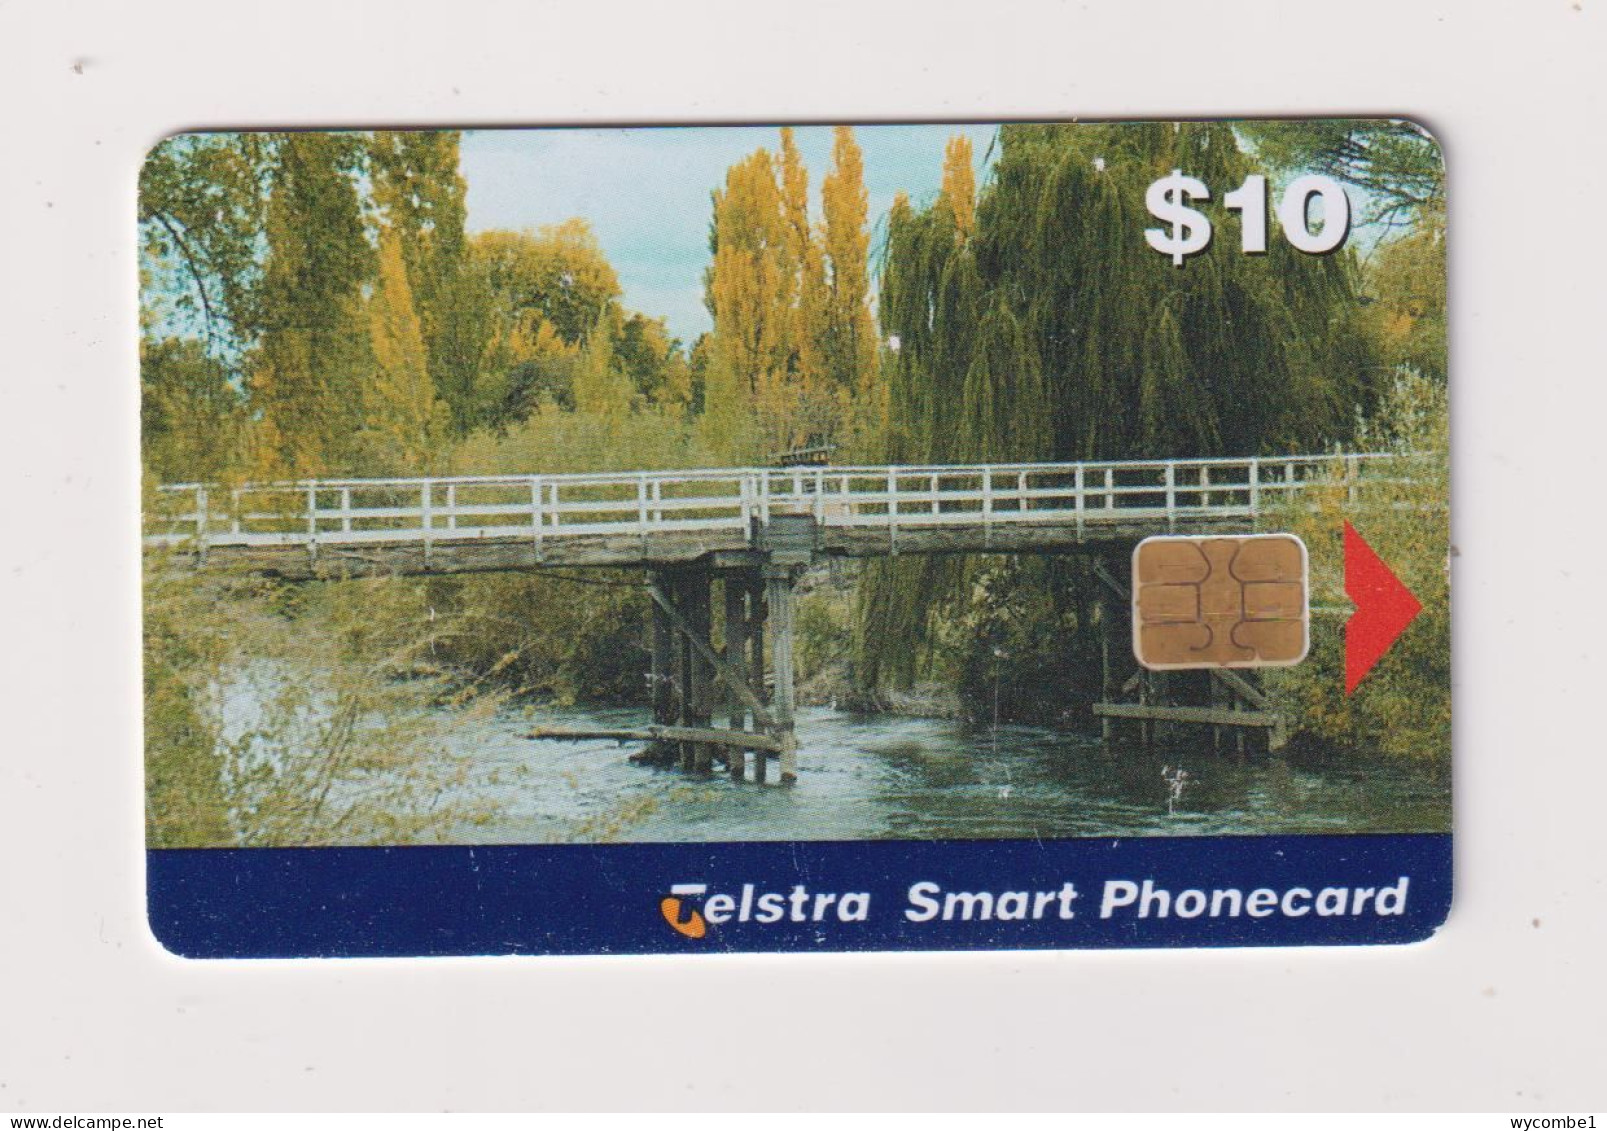 AUSTRALIA -   Tumut Town Bridge Chip Phonecard - Australie